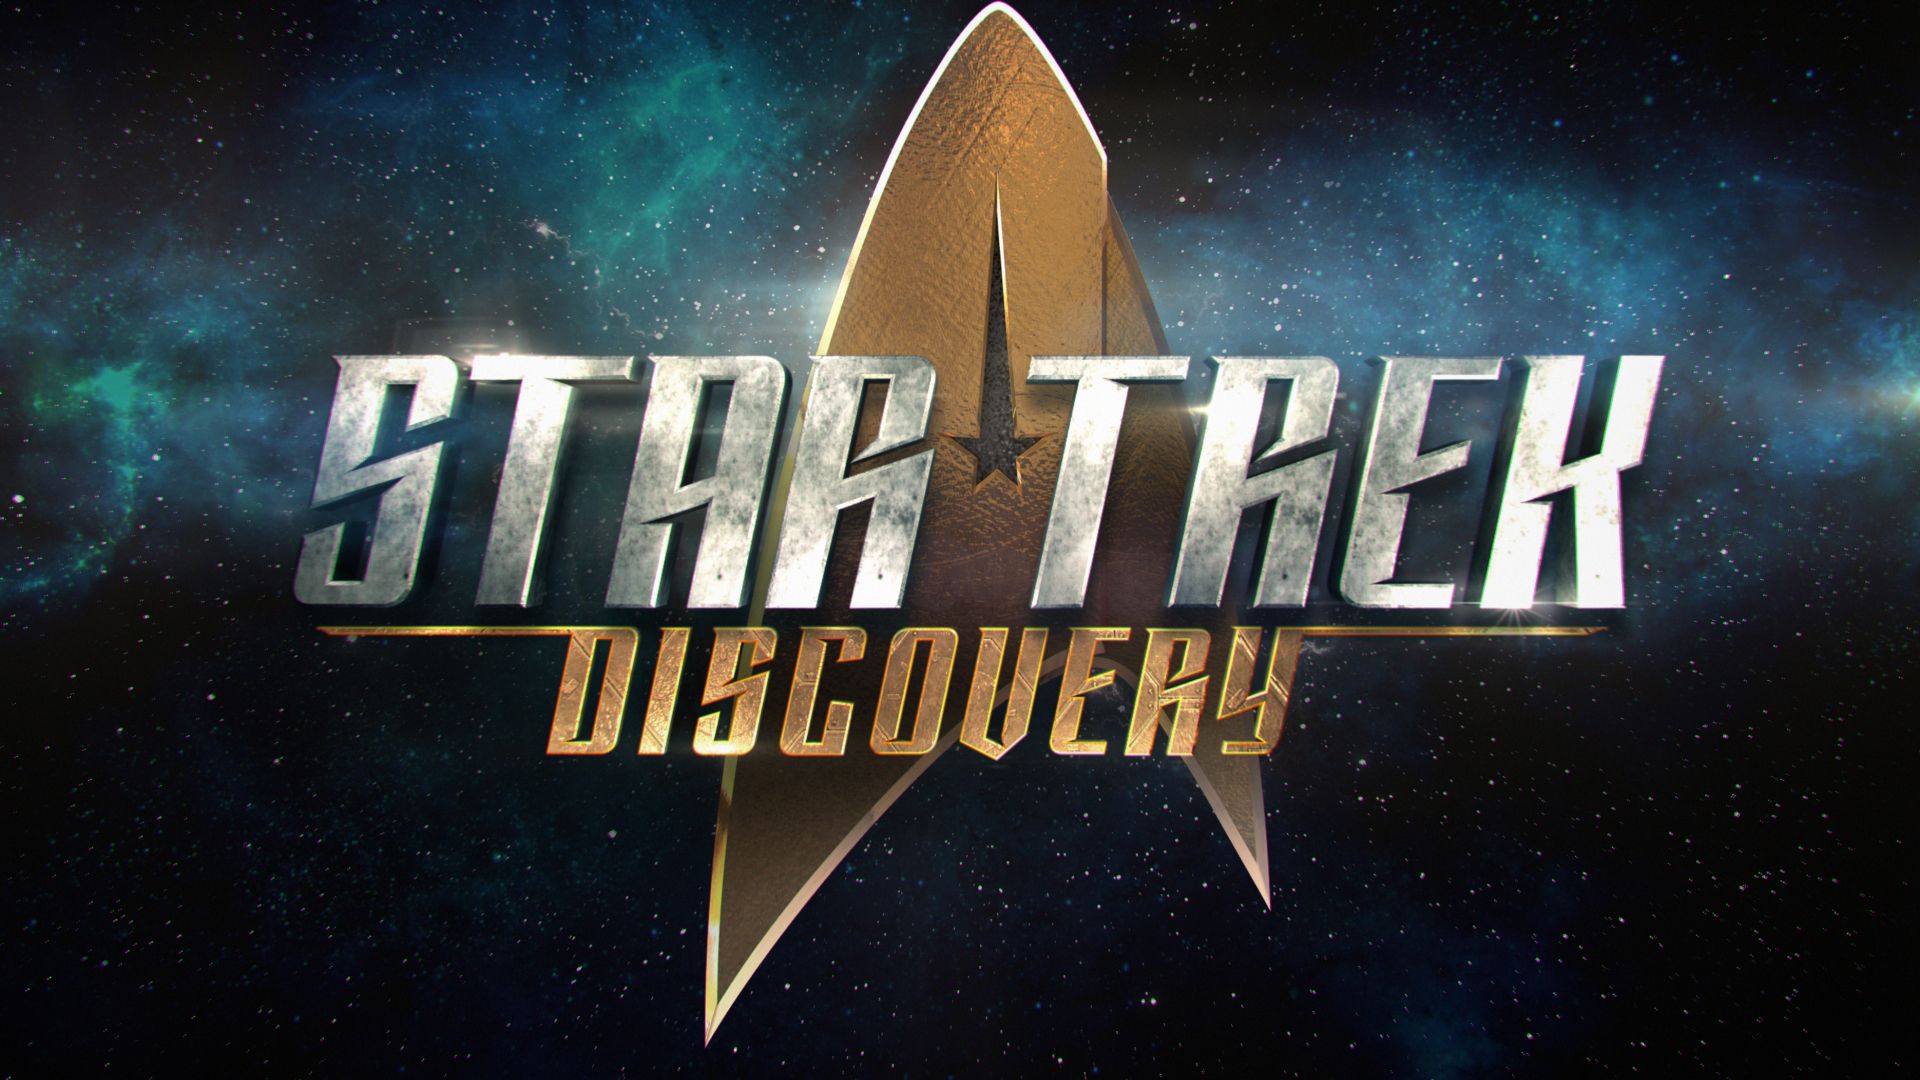 em>Star Trek: Discovery</em> Draws 9.6 Million Viewers In Sunday Premiere